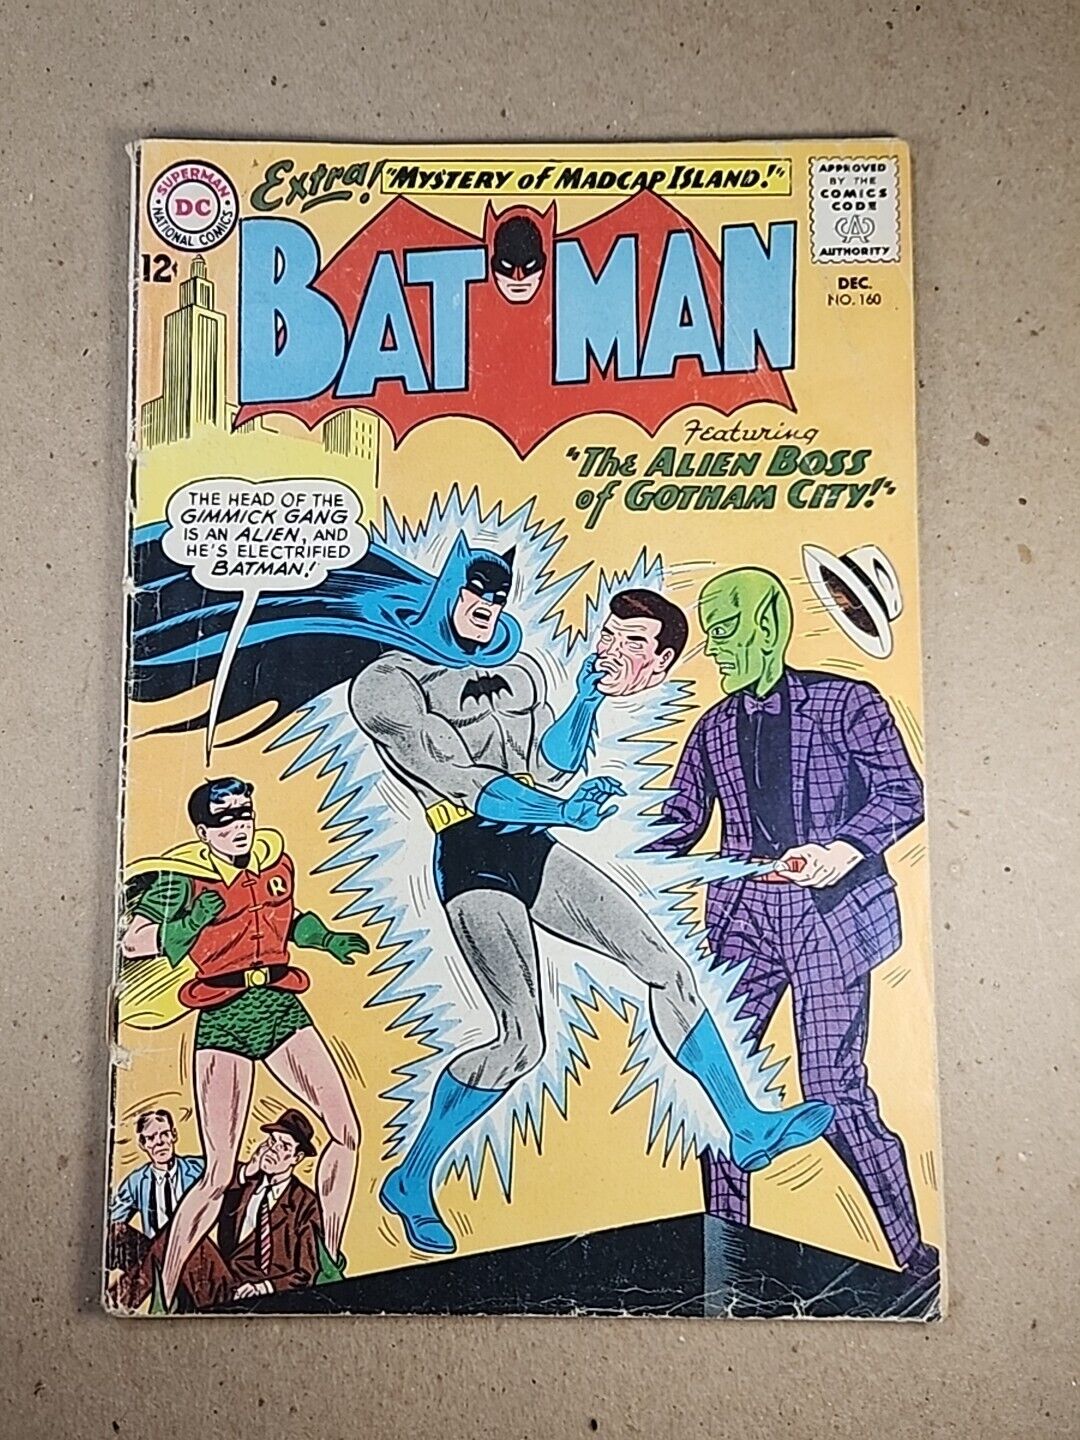 Batman #160 1963 “The Alien Boss of Gotham City”